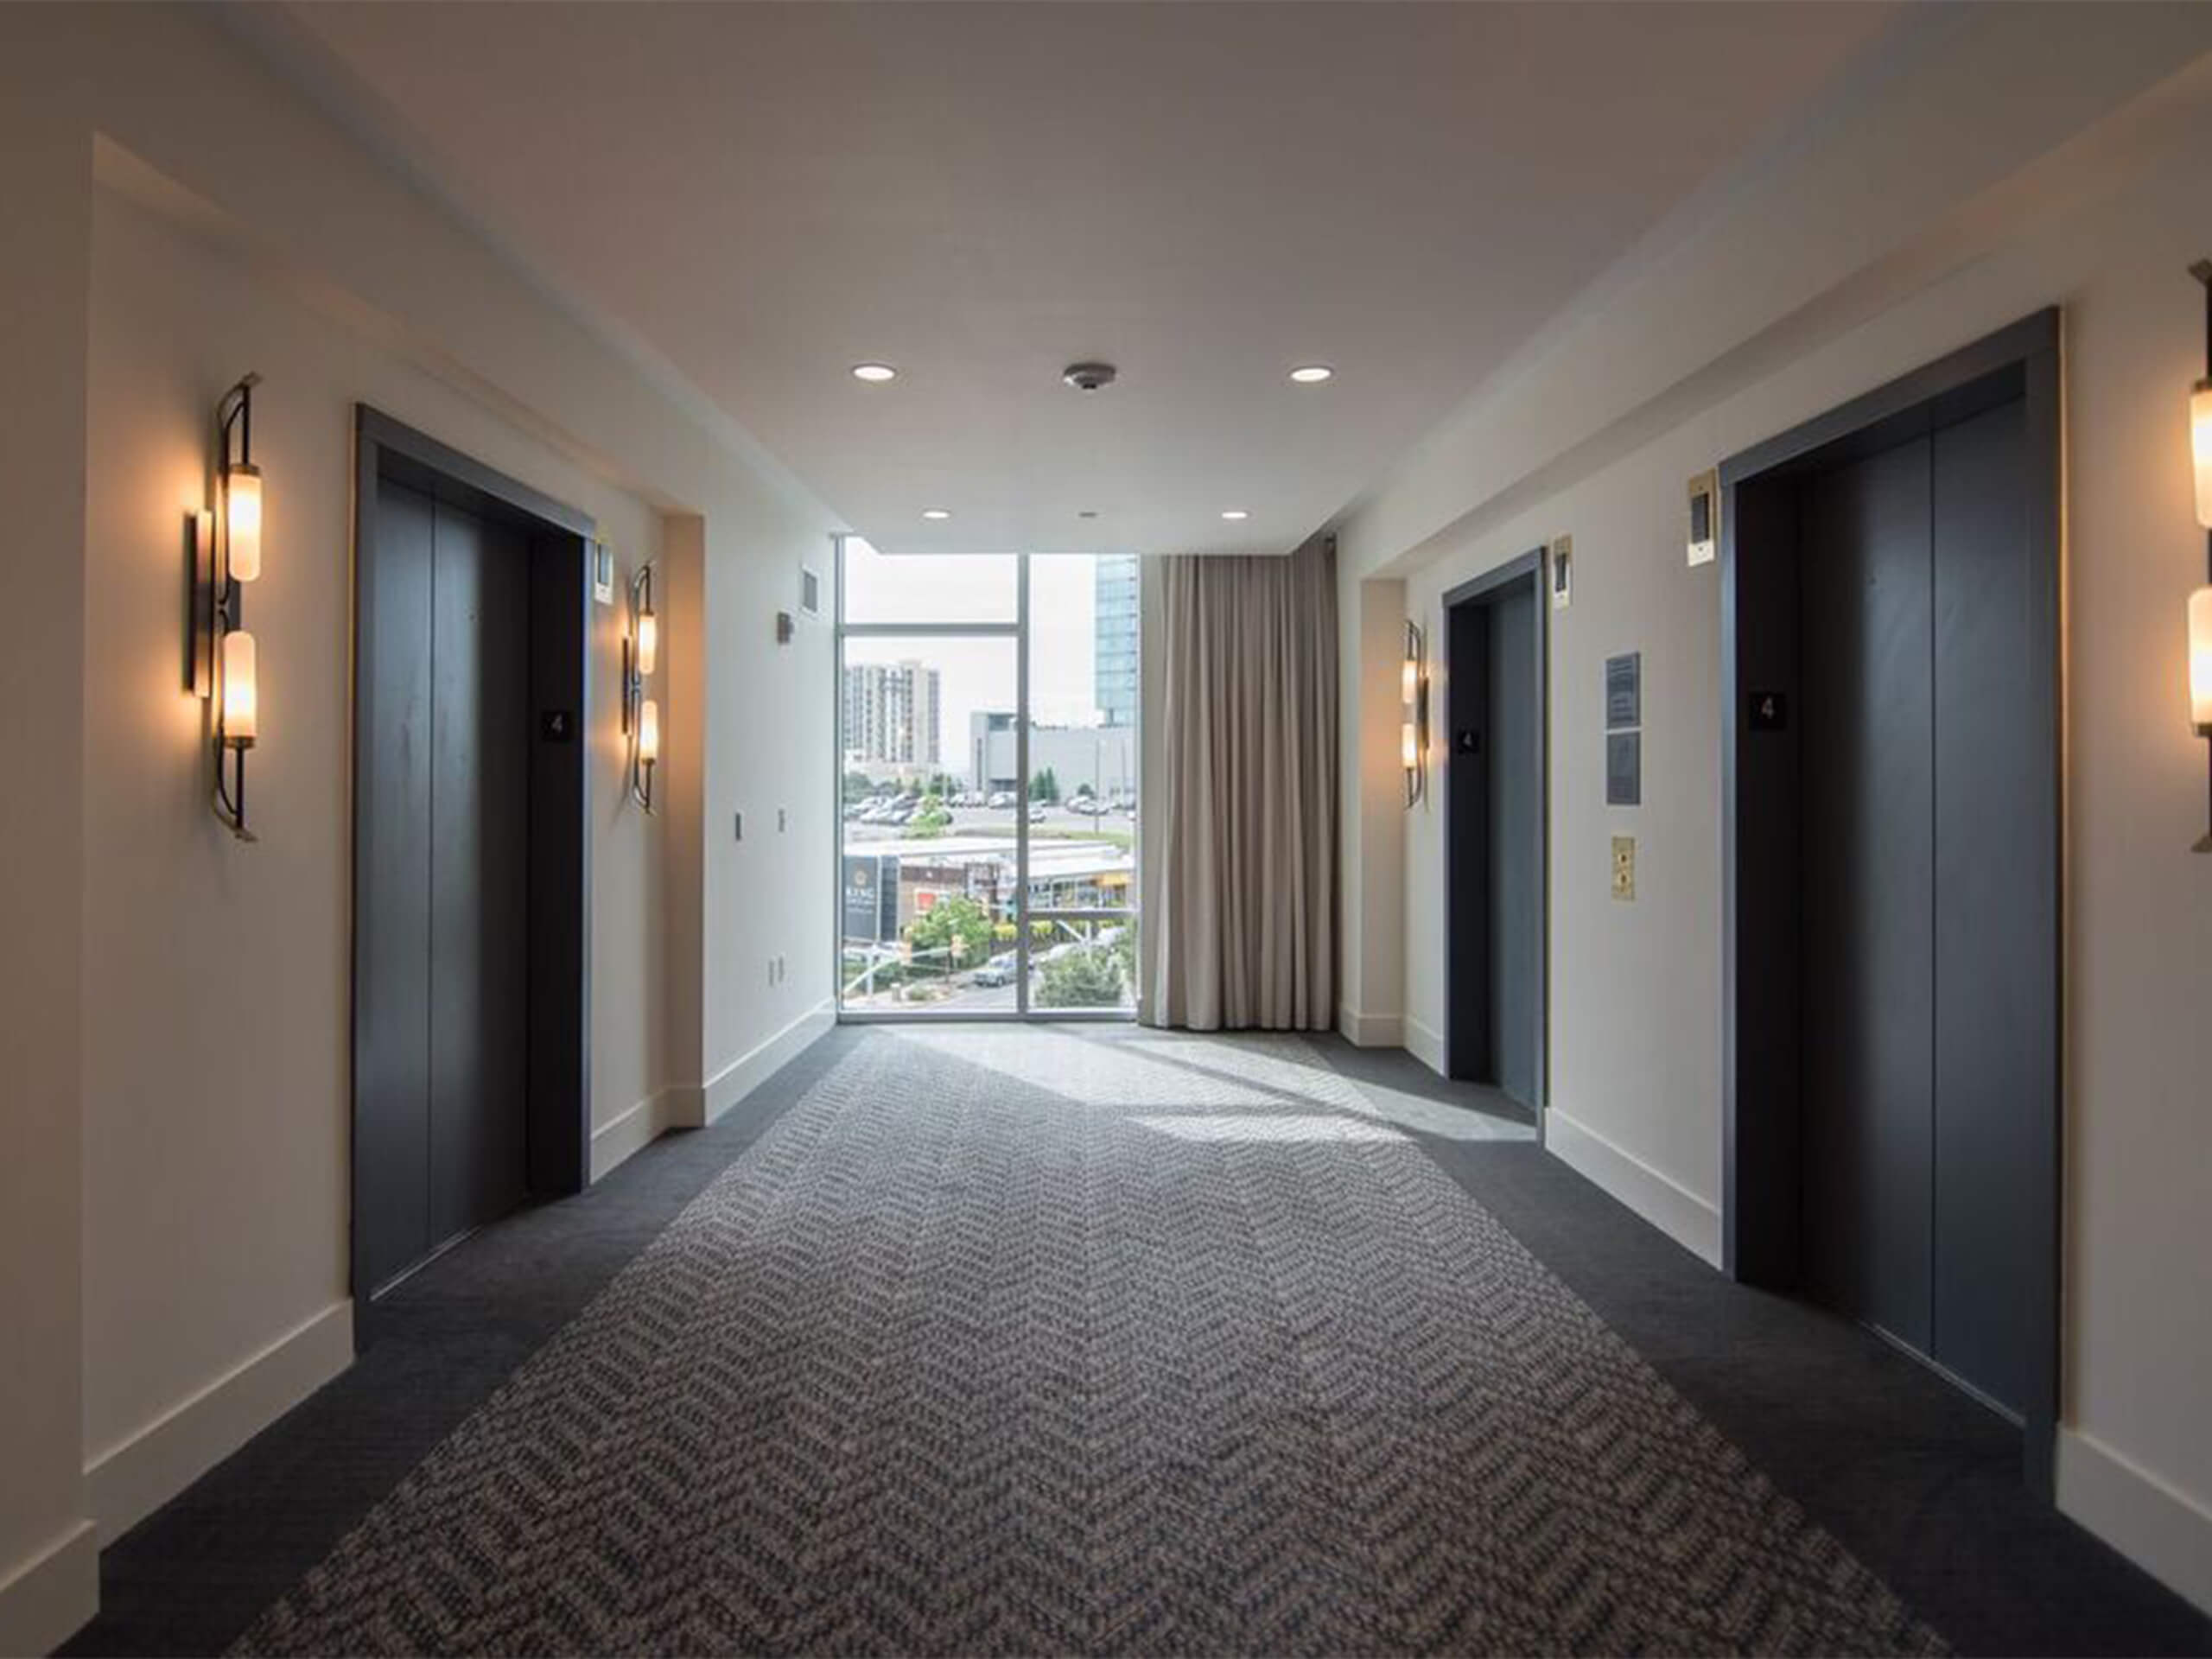 thompson hotel - hallway lighting enterprise solutions